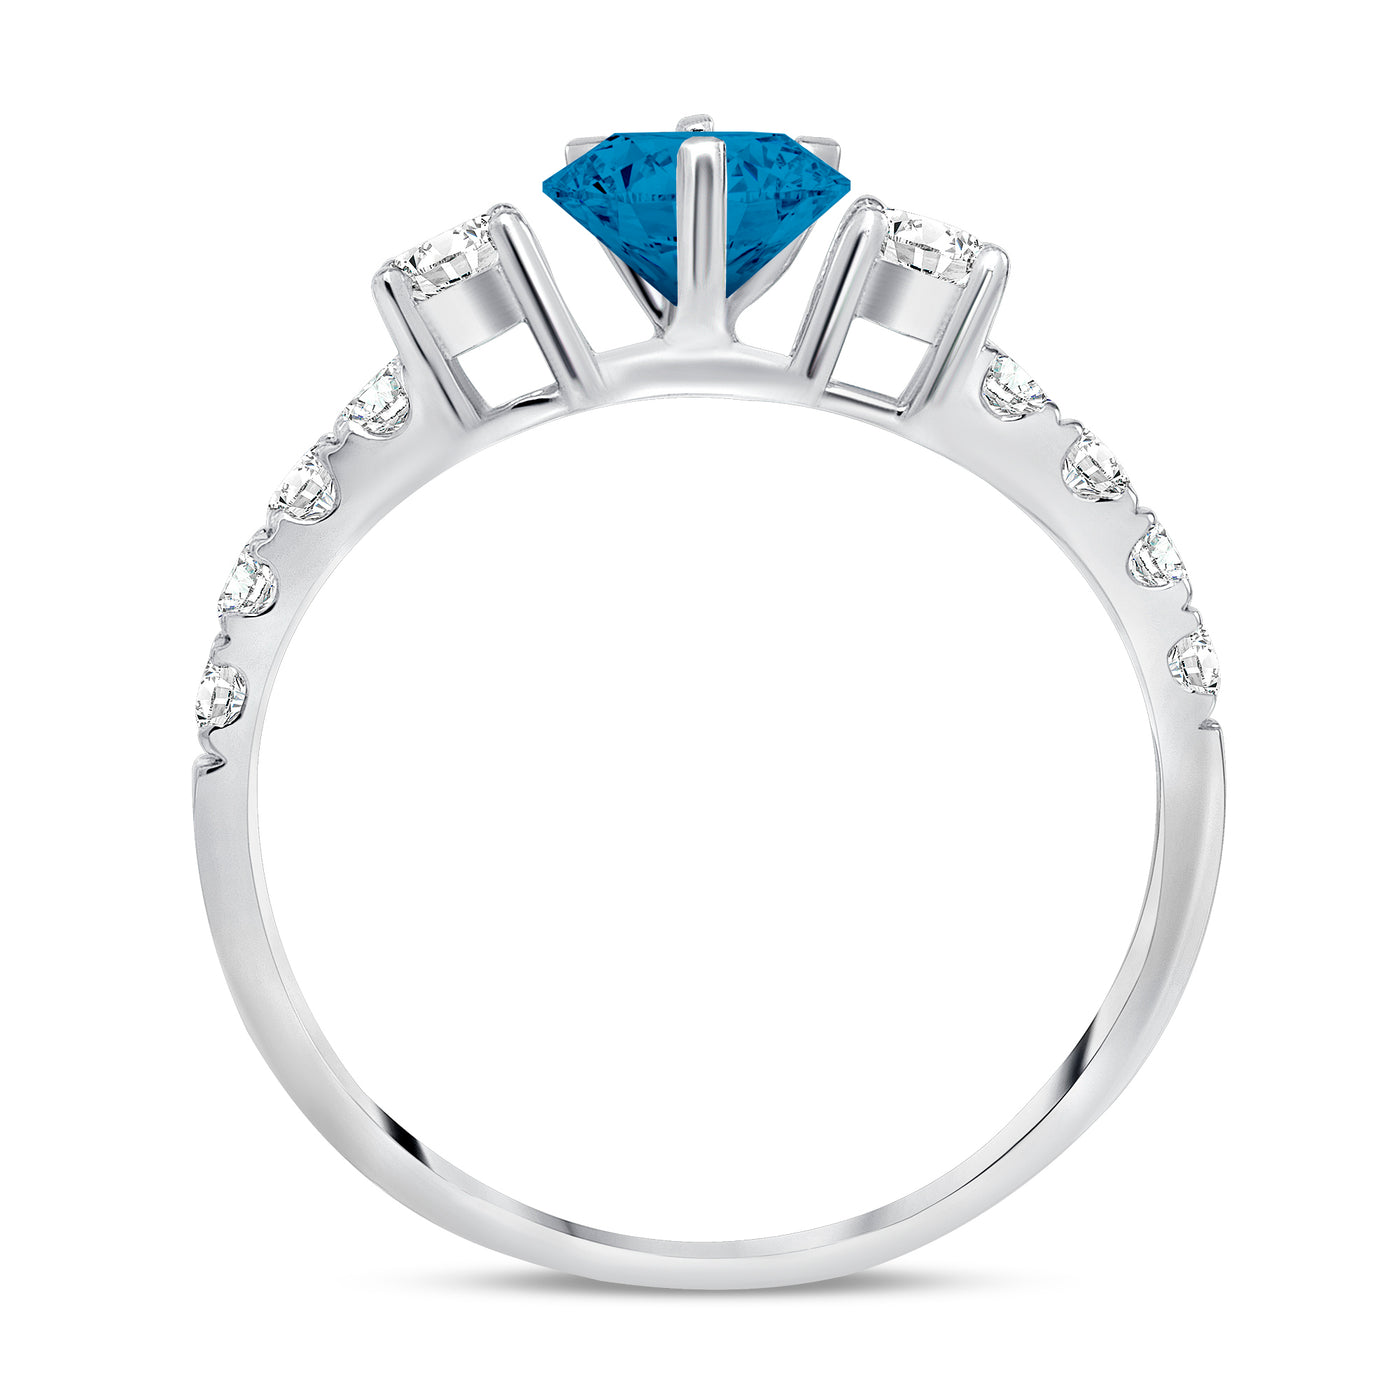 5MM Natural London Blue Topaz Round Cut Diamond Ring 0.58 Carat Diamond